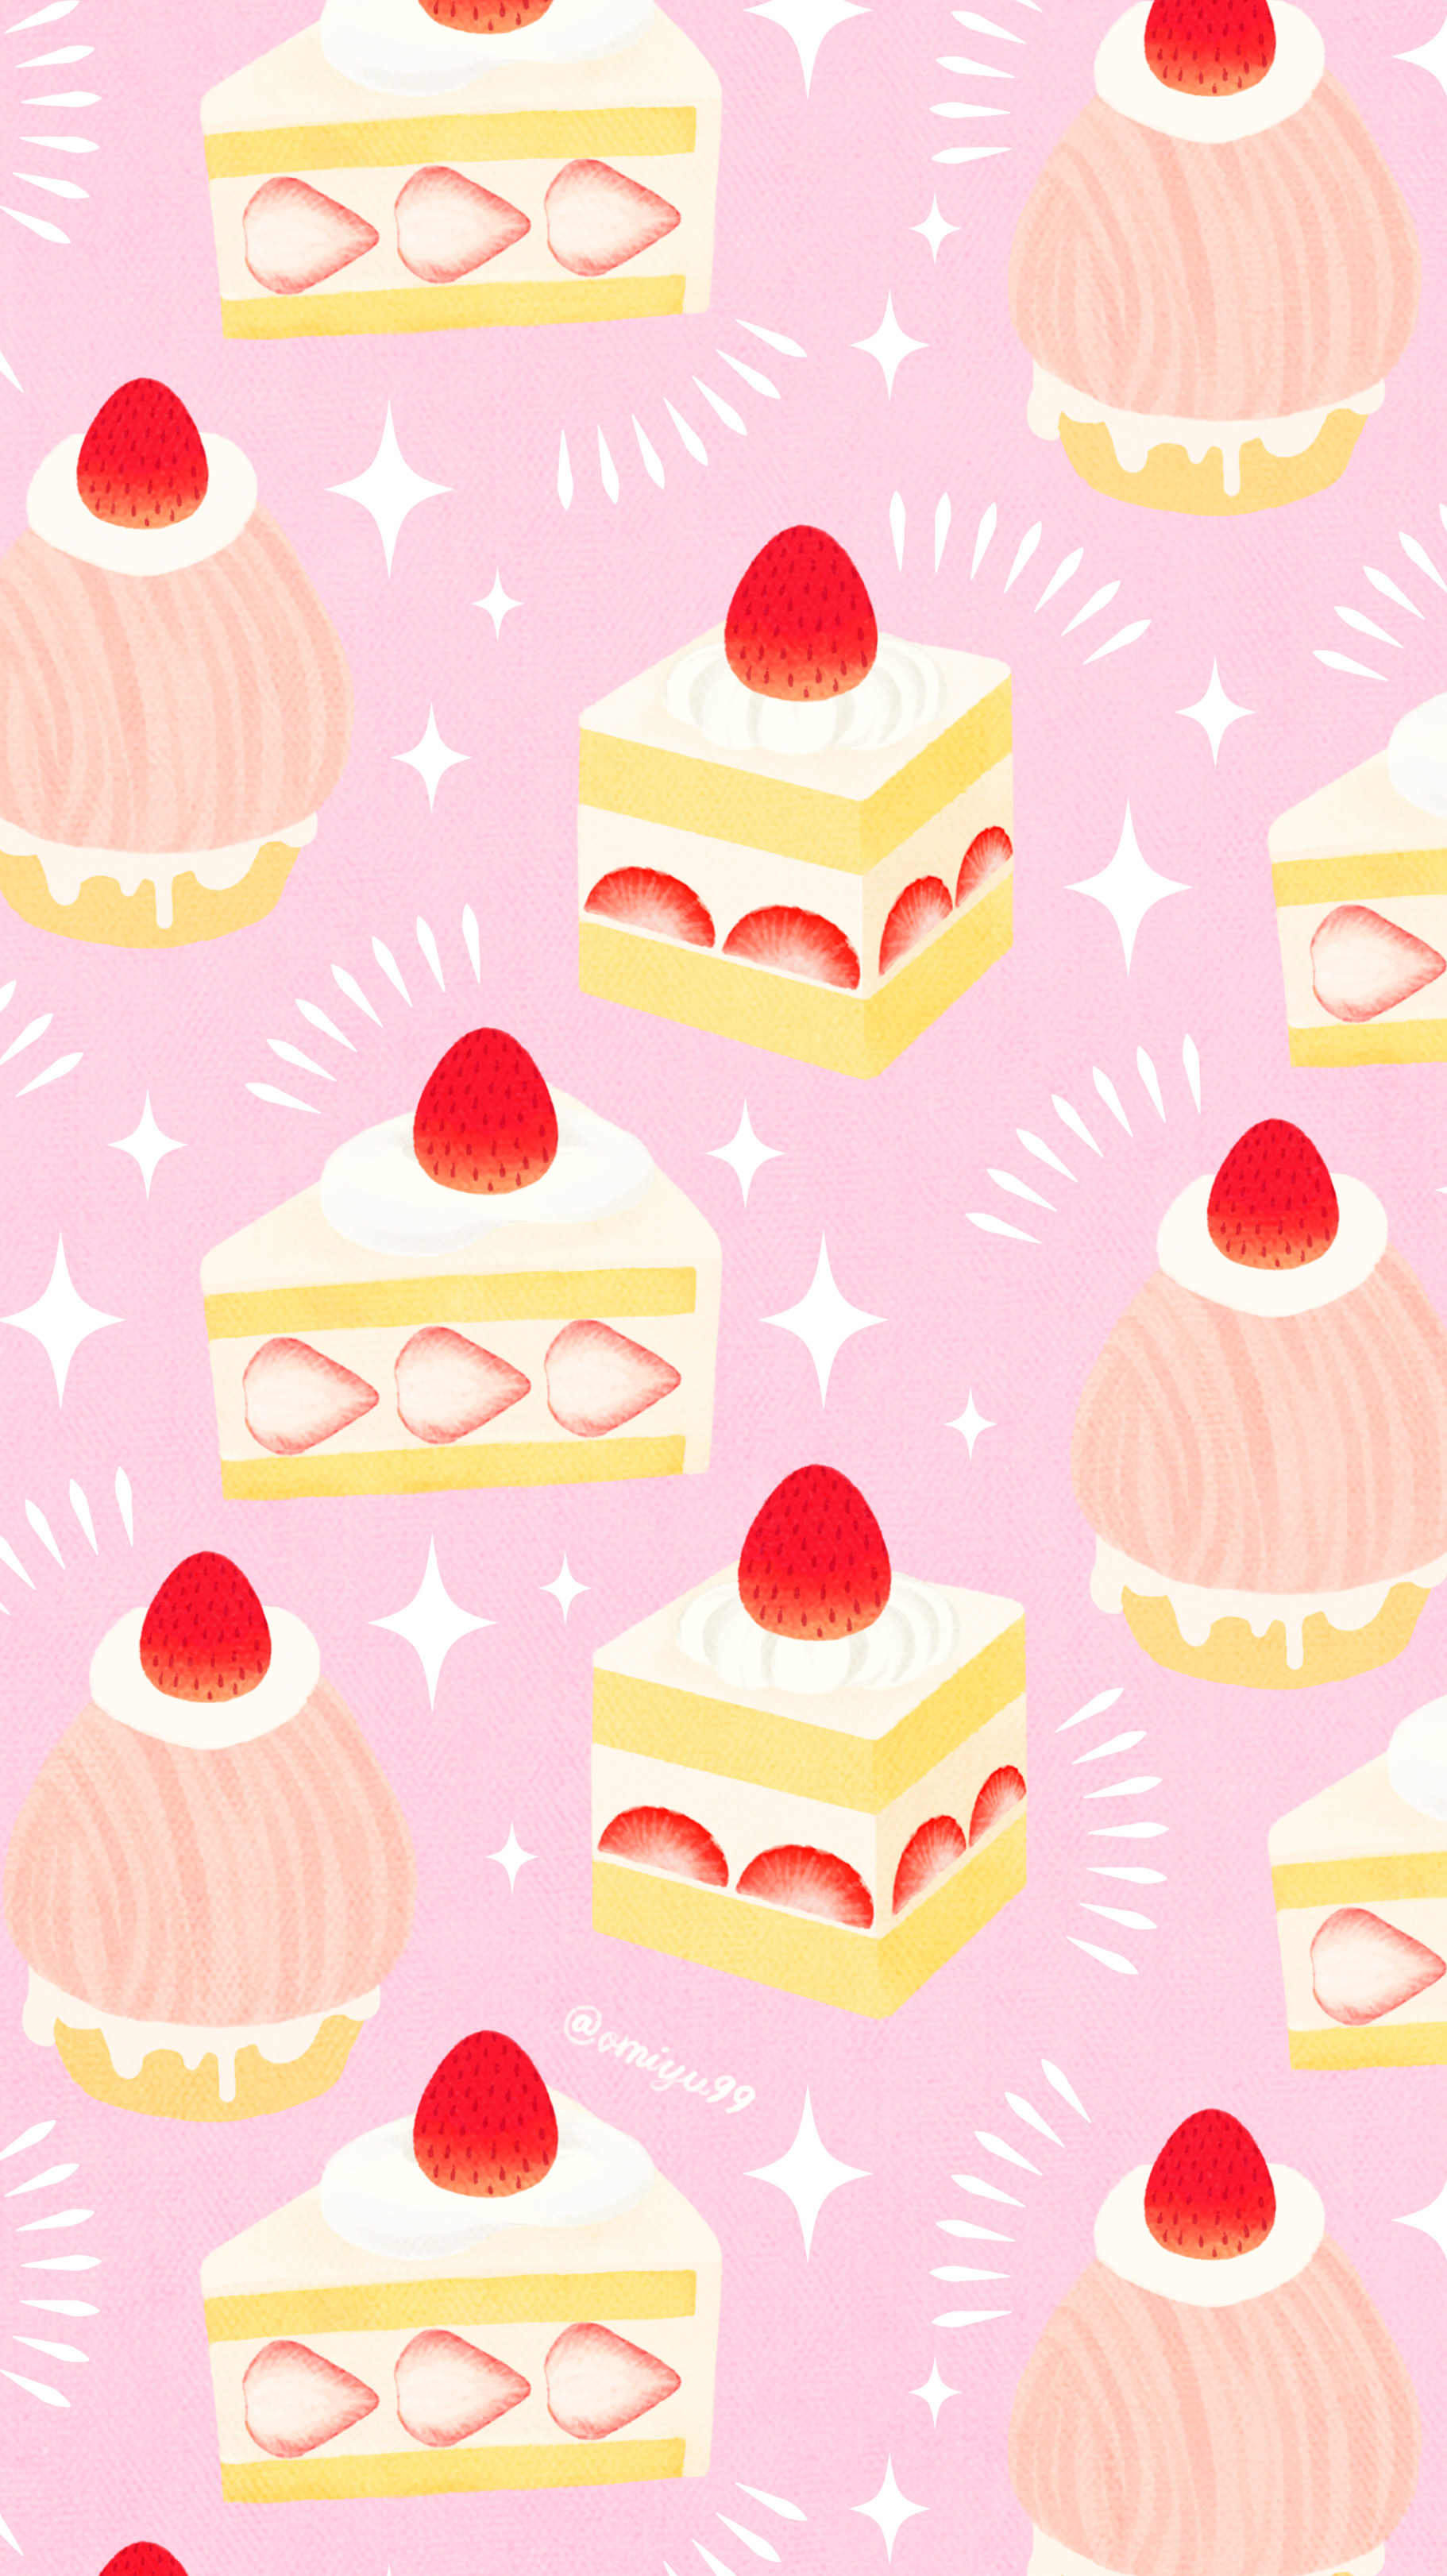 Omiyu Twitter पर いちごケーキな壁紙 Illust Illustration 壁紙 イラスト Iphone壁紙 ケーキ いちご 食べ物 Strawberry Cake T Co Qk9wl2wgqj Twitter